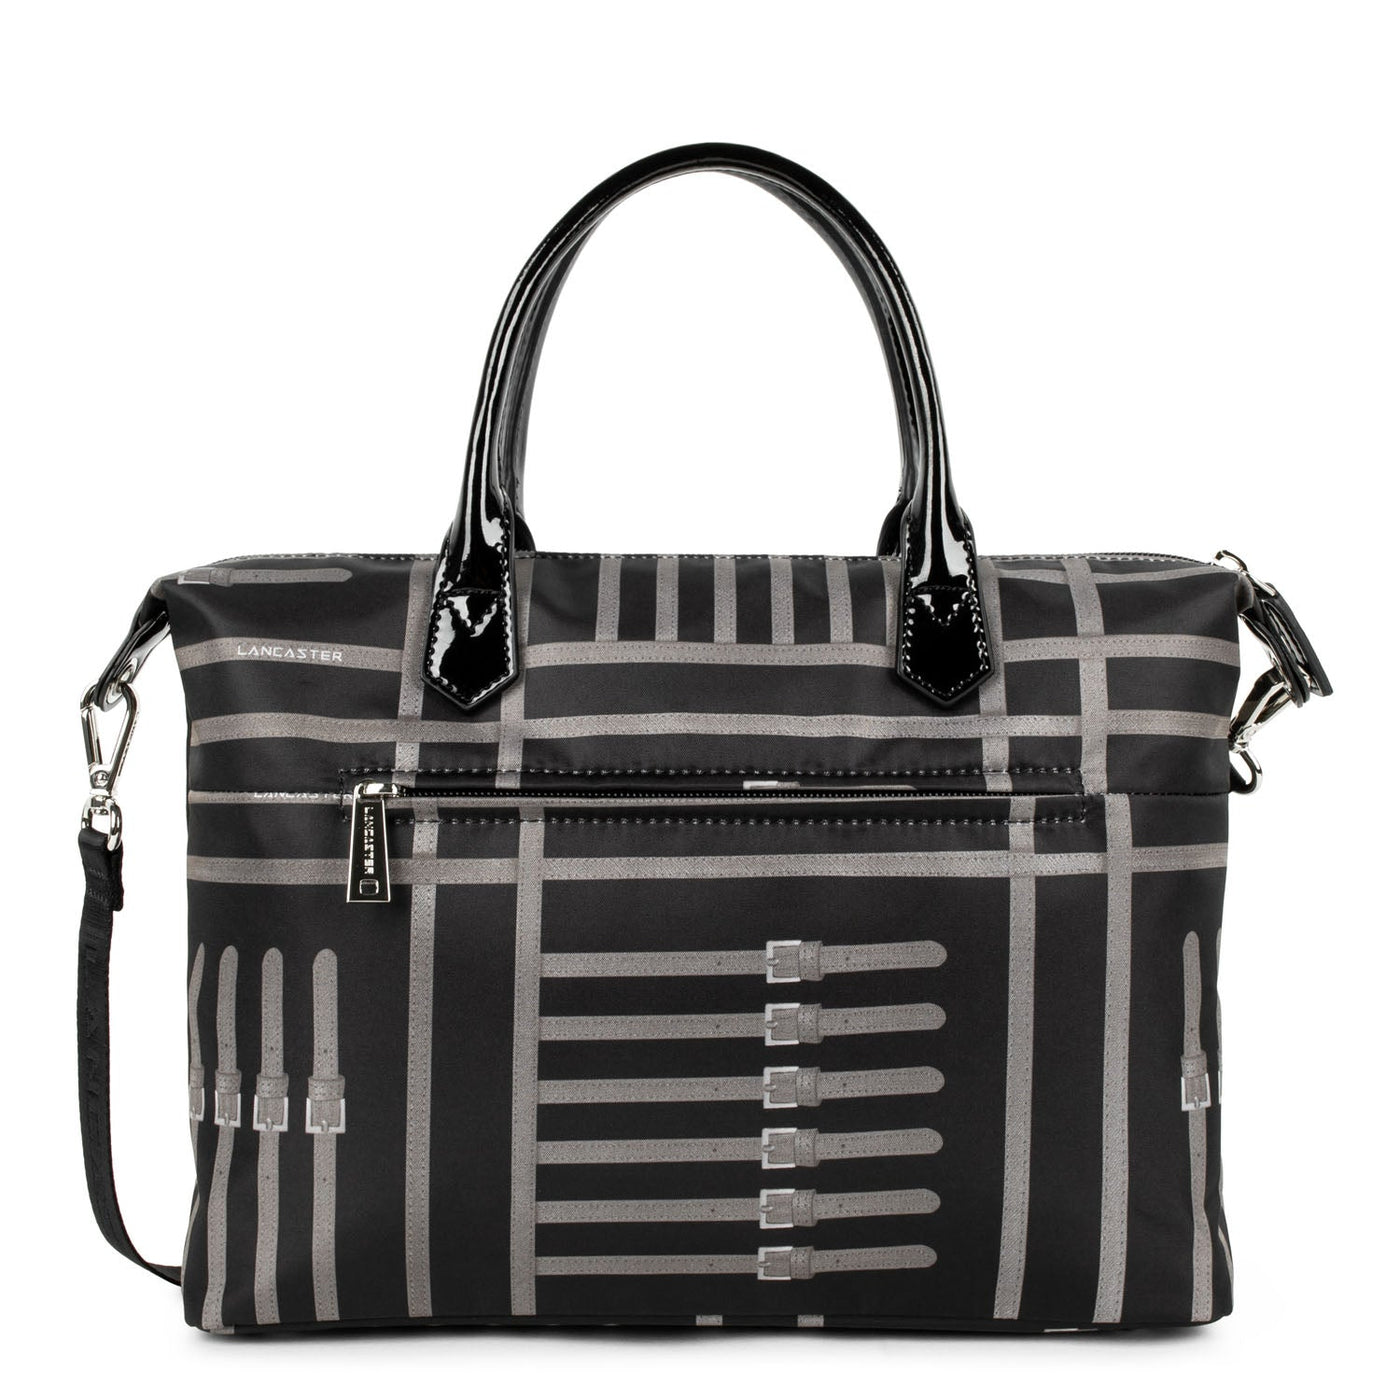 m handbag - basic verni #couleur_noir-taupe